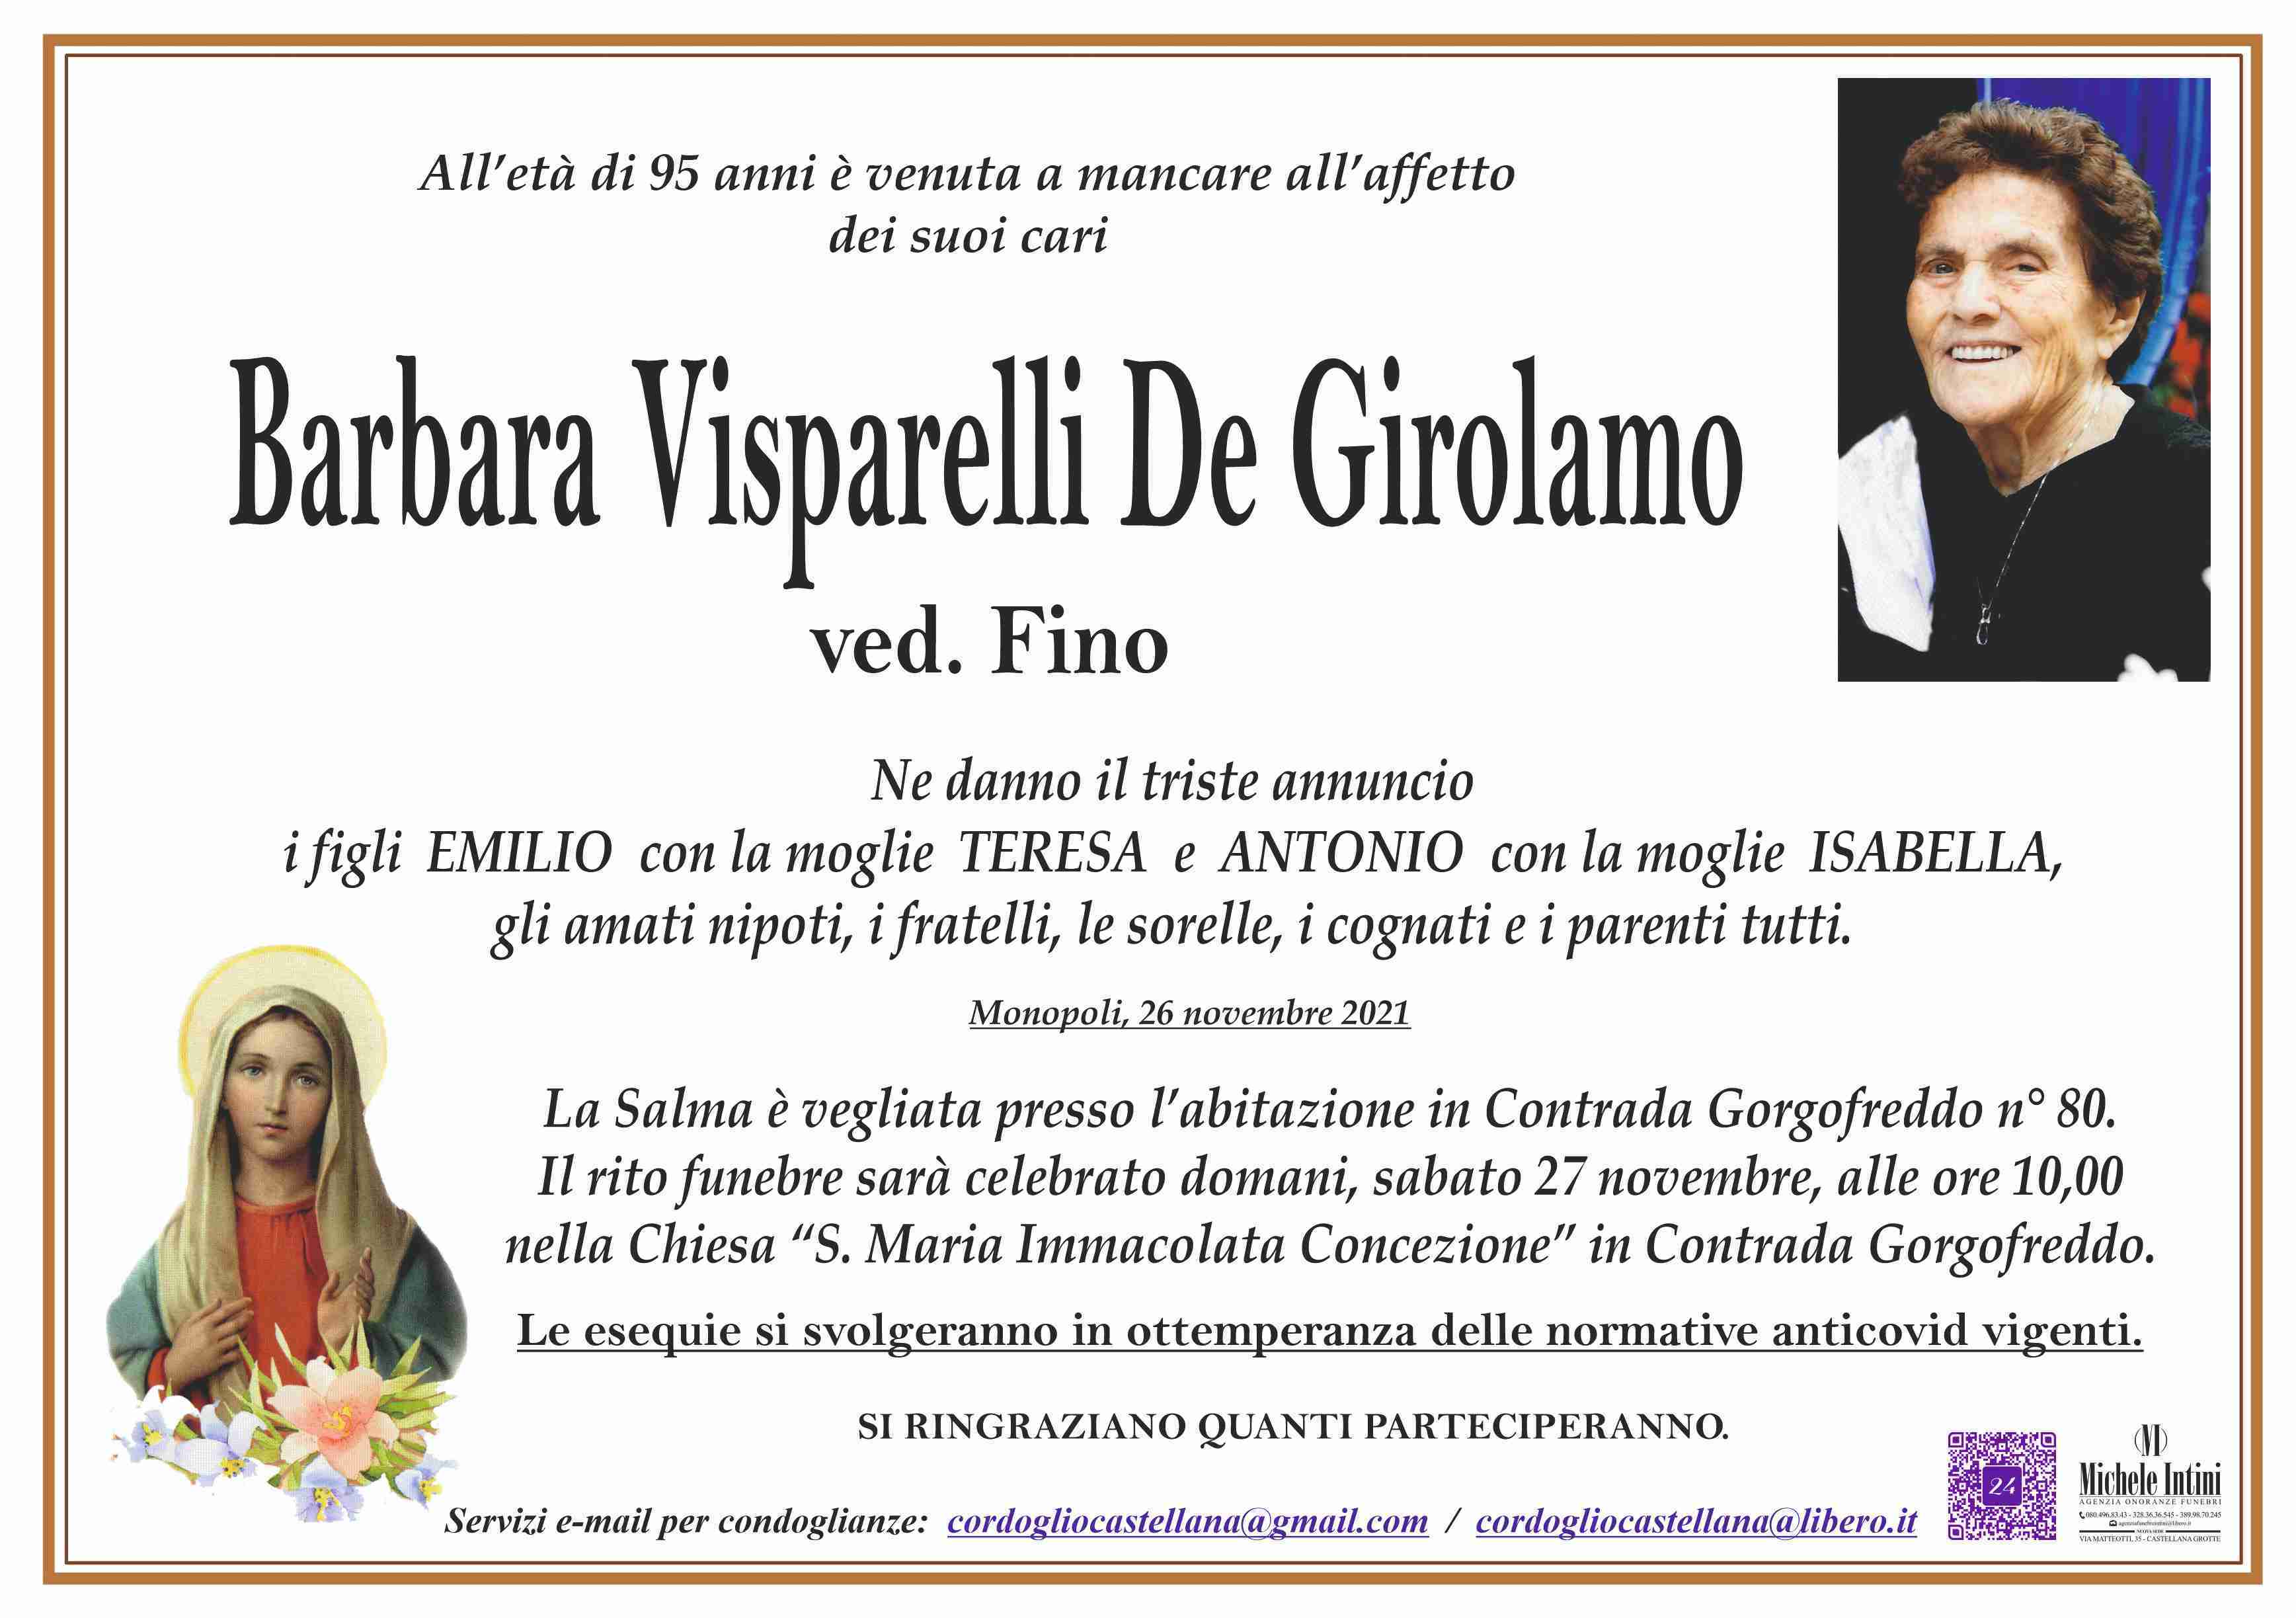 Barbara Visparelli De Girolamo